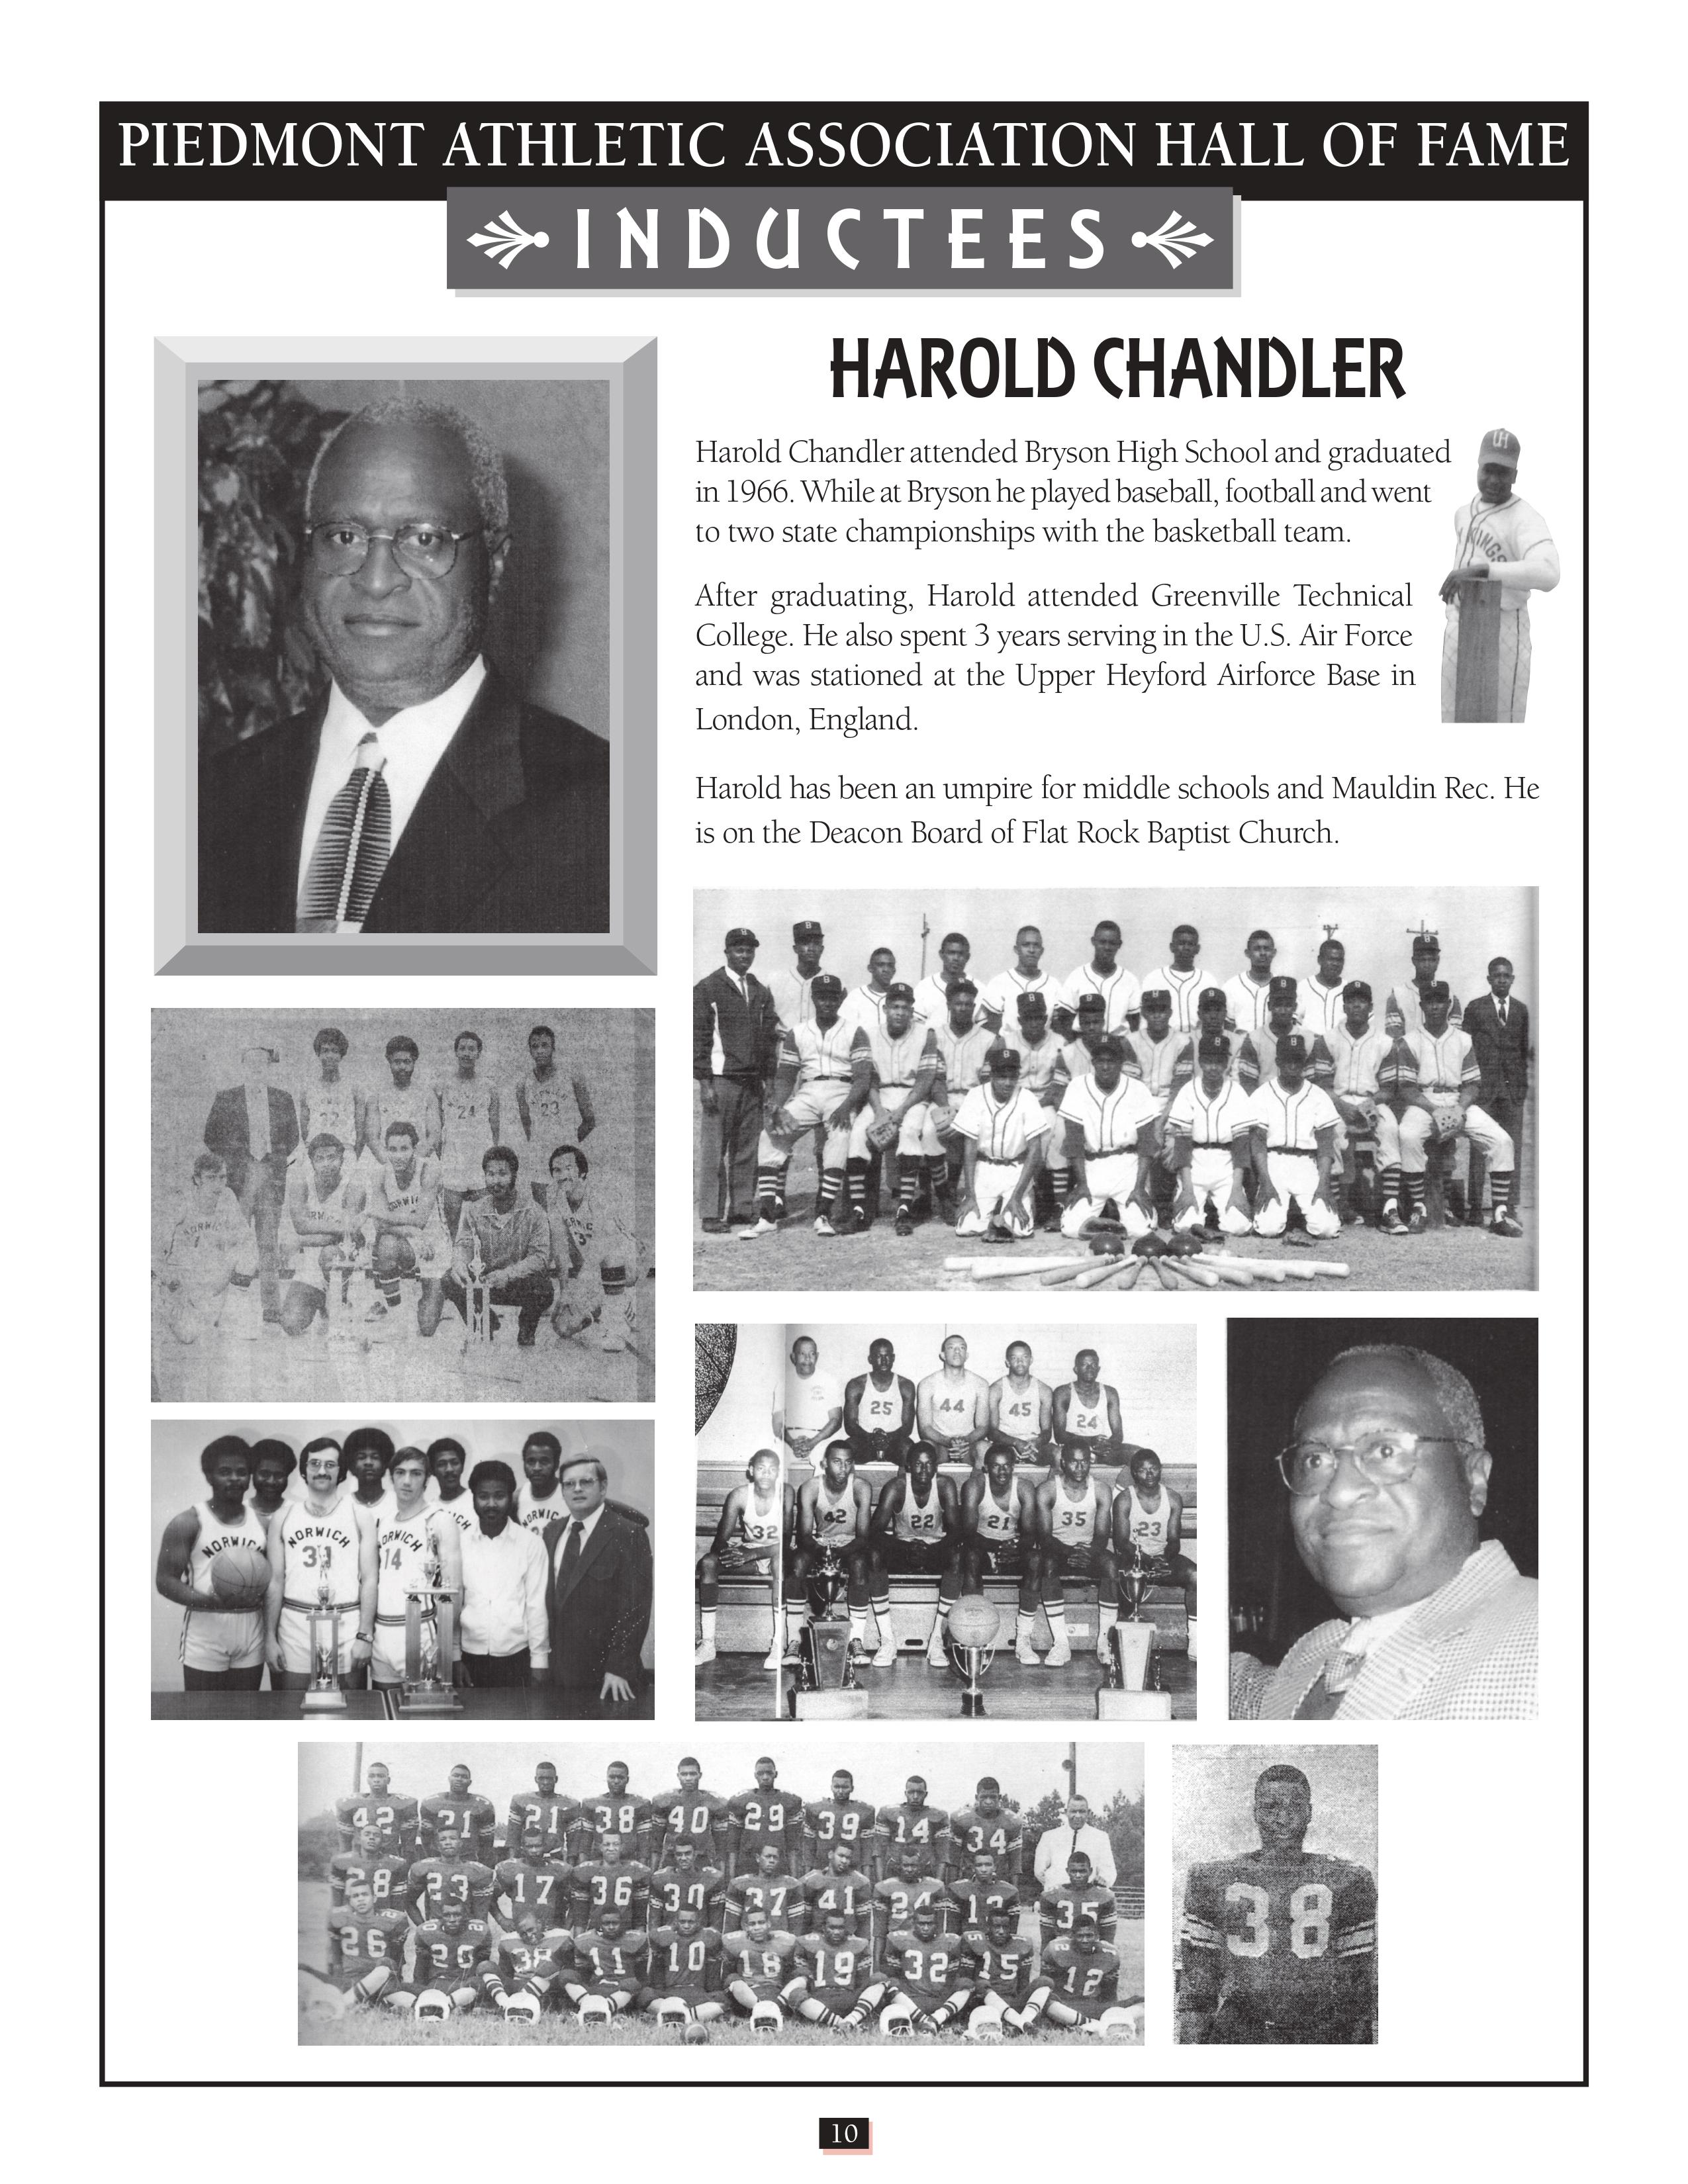 Harold Chandler